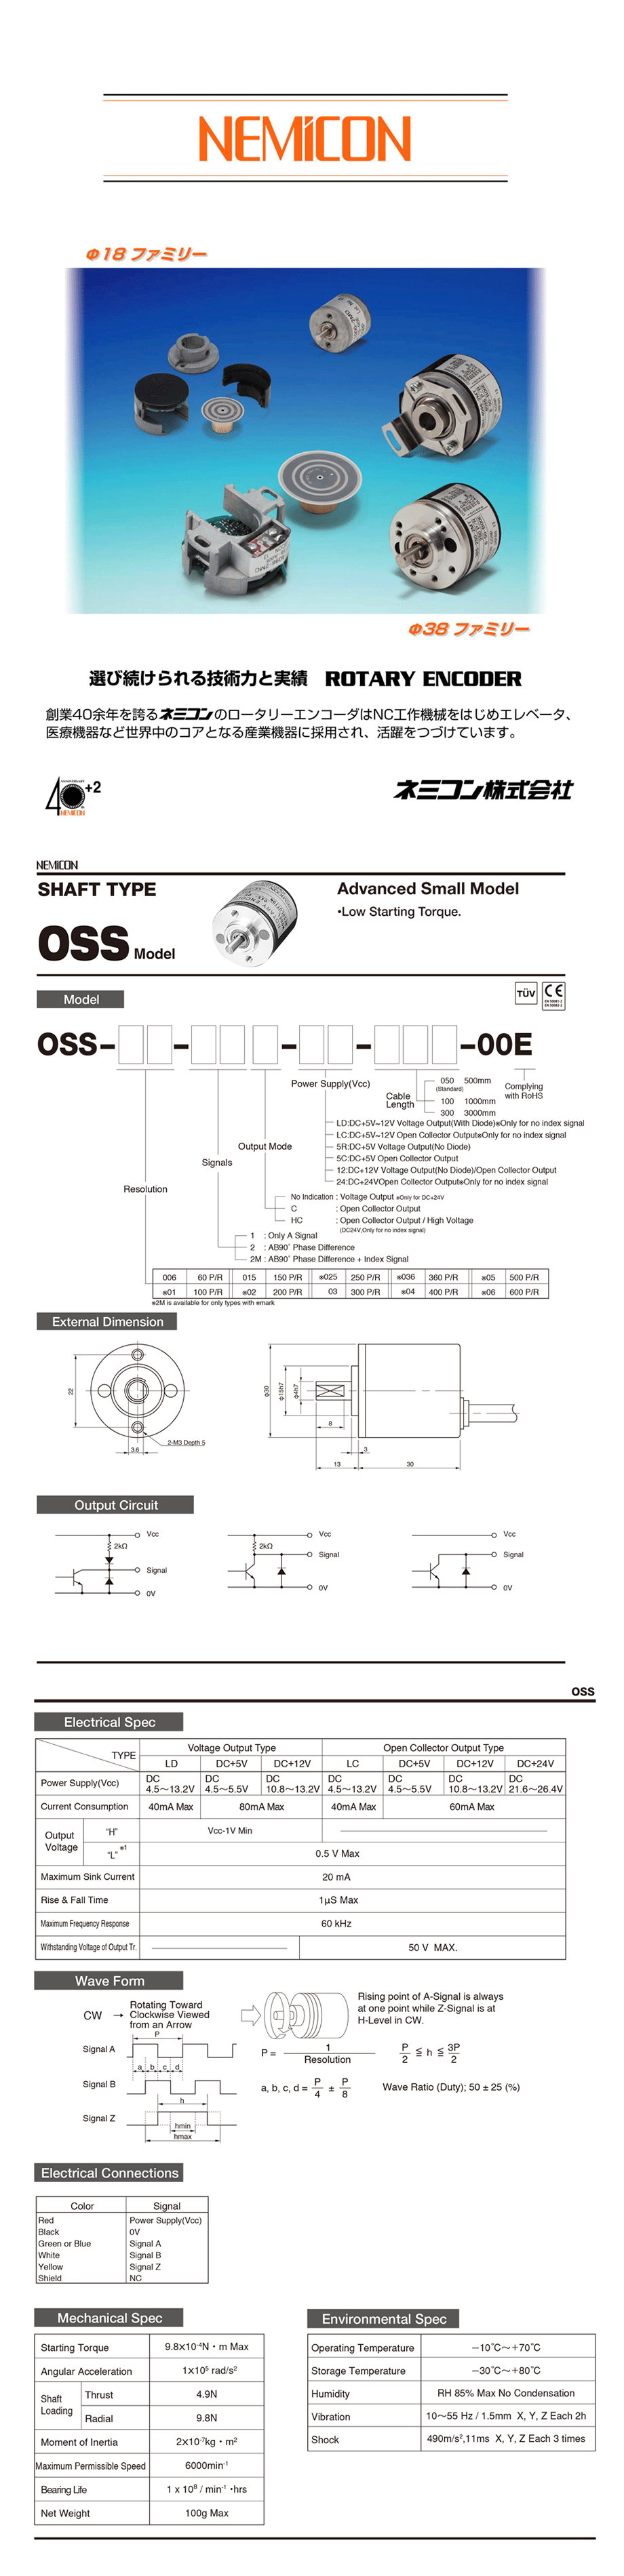 OSS系列详情页-1.png